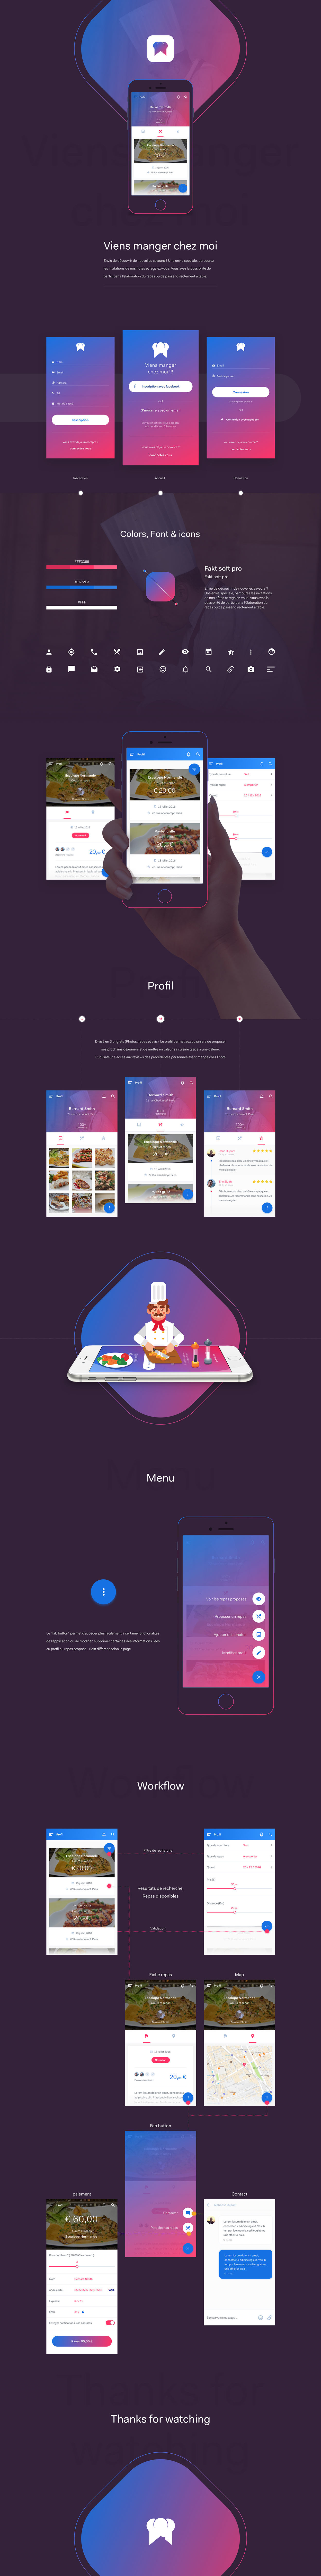 application ux/ui design Food  Webdesign mobile interface